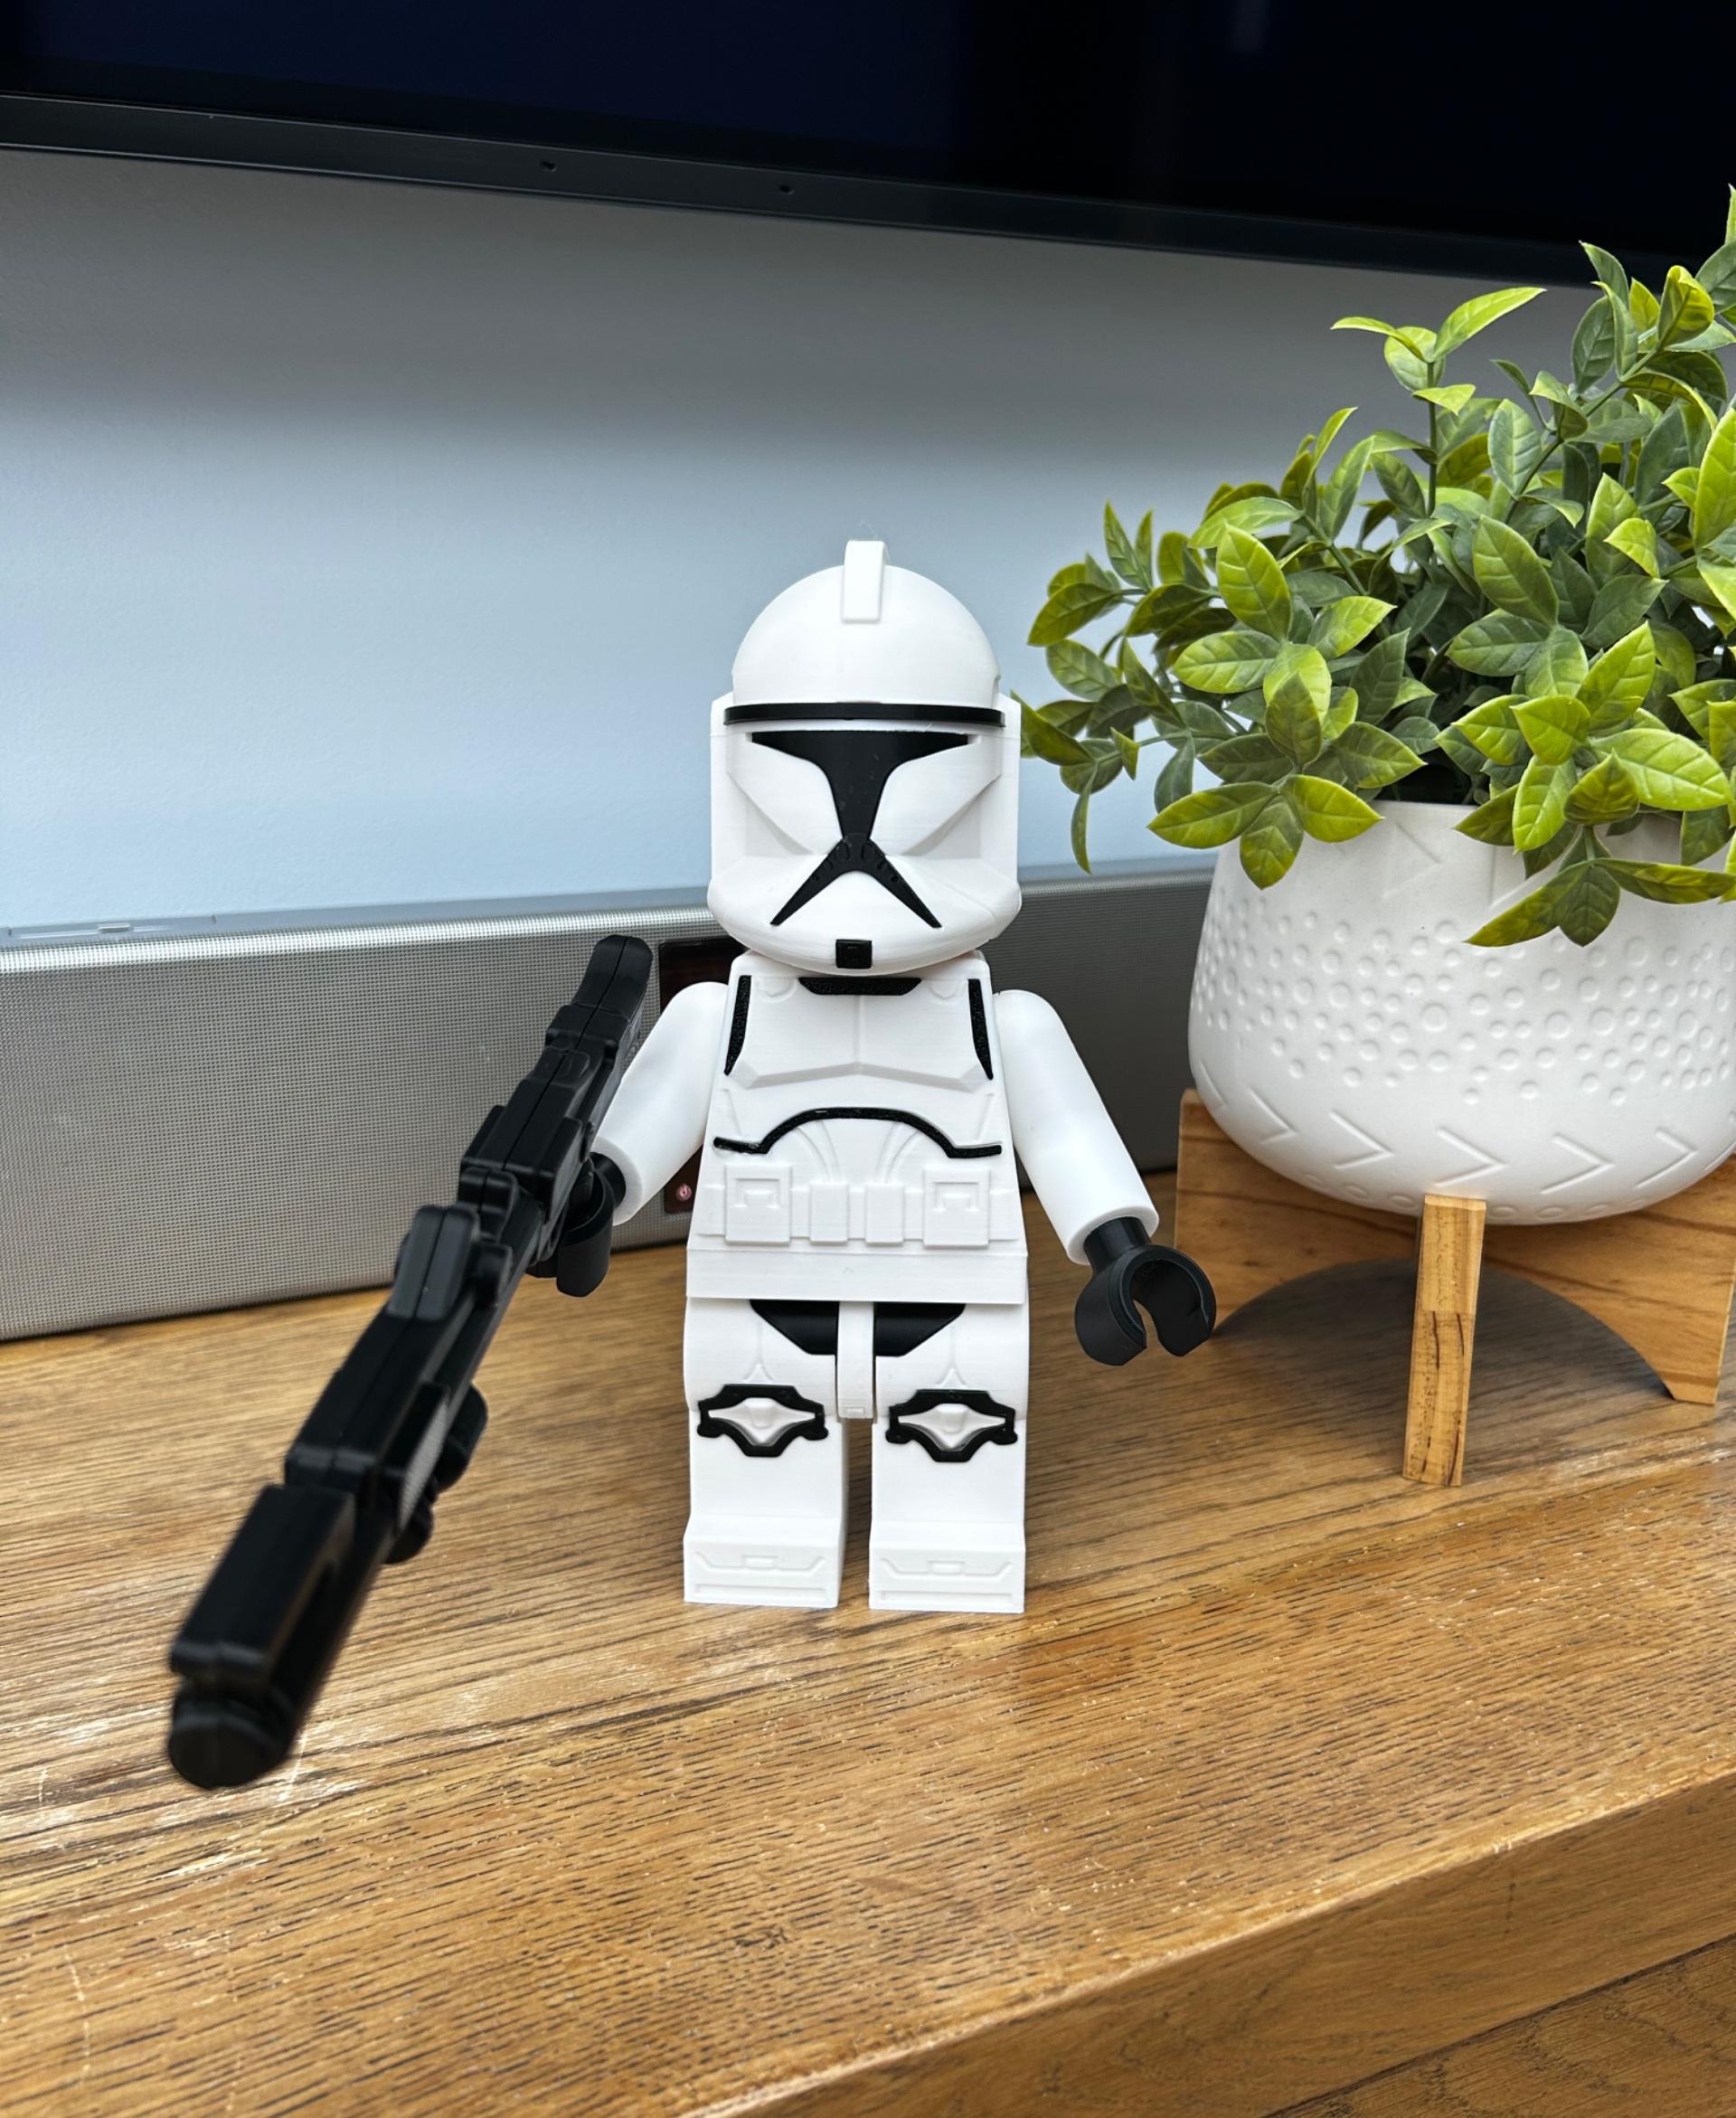 Clone Trooper - Phase I (6:1 LEGO-inspired brick figure, NO MMU/AMS, NO supports, NO glue) 3d model